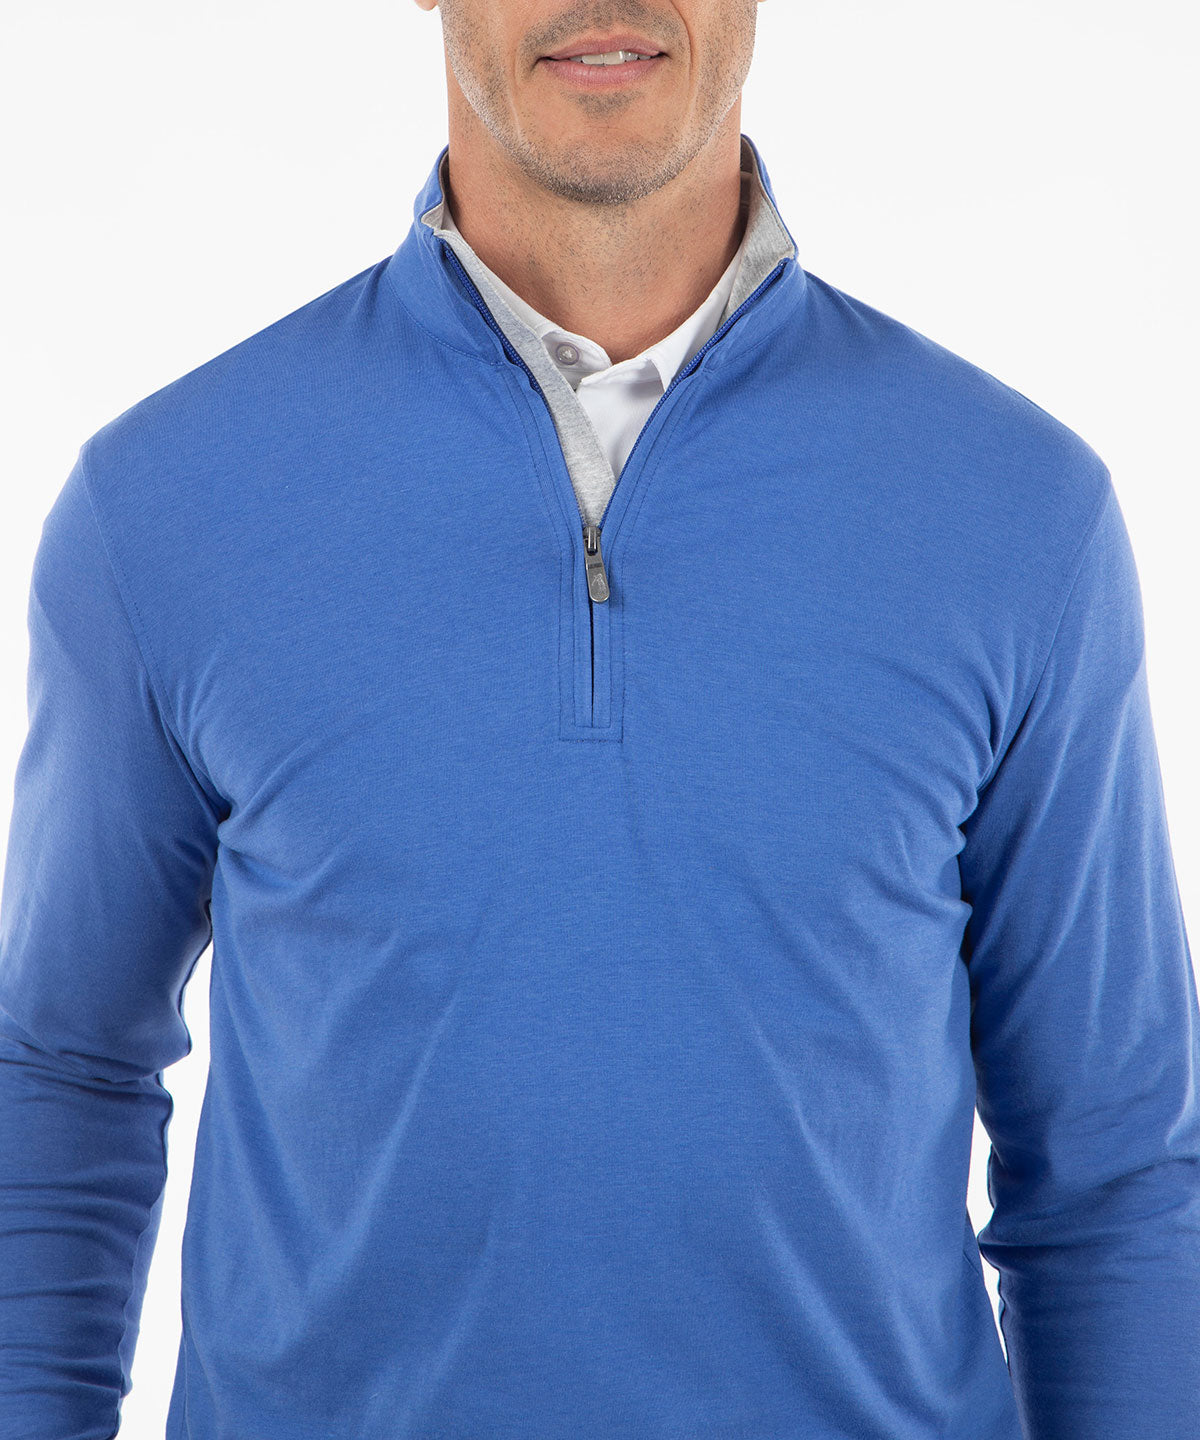 Tri-Color Lightweight Cotton Quarter-Zip Pullover